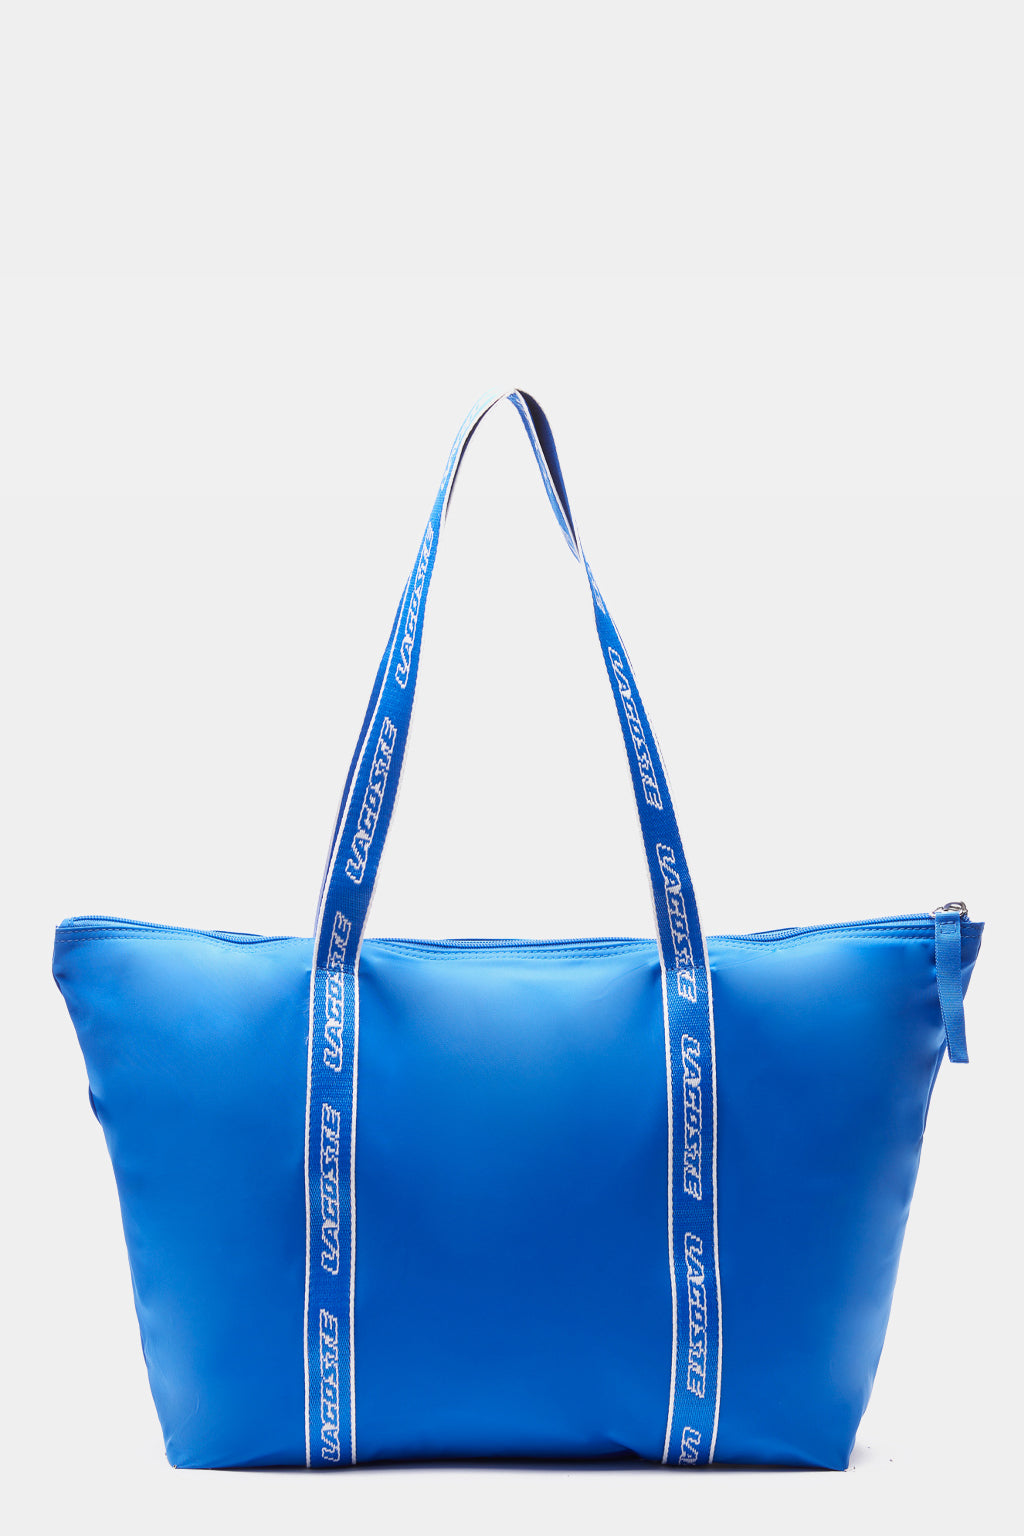 Lacoste - Color Block Branded Tote Bag